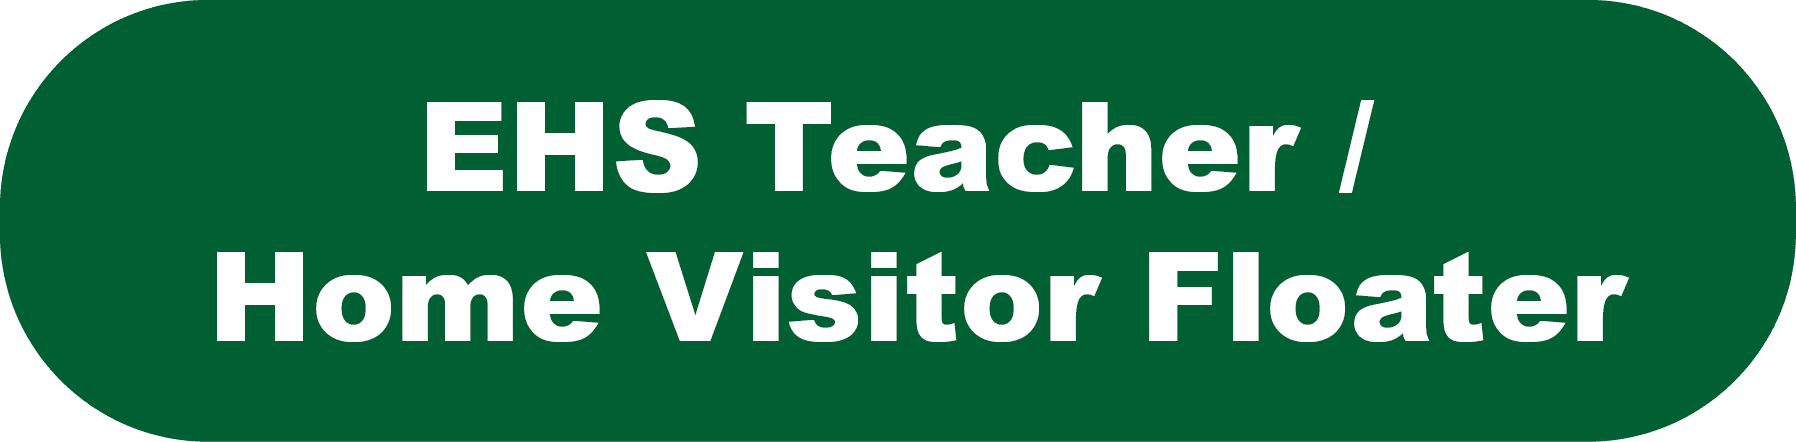 EHS Teacher Home Visitor/Floater